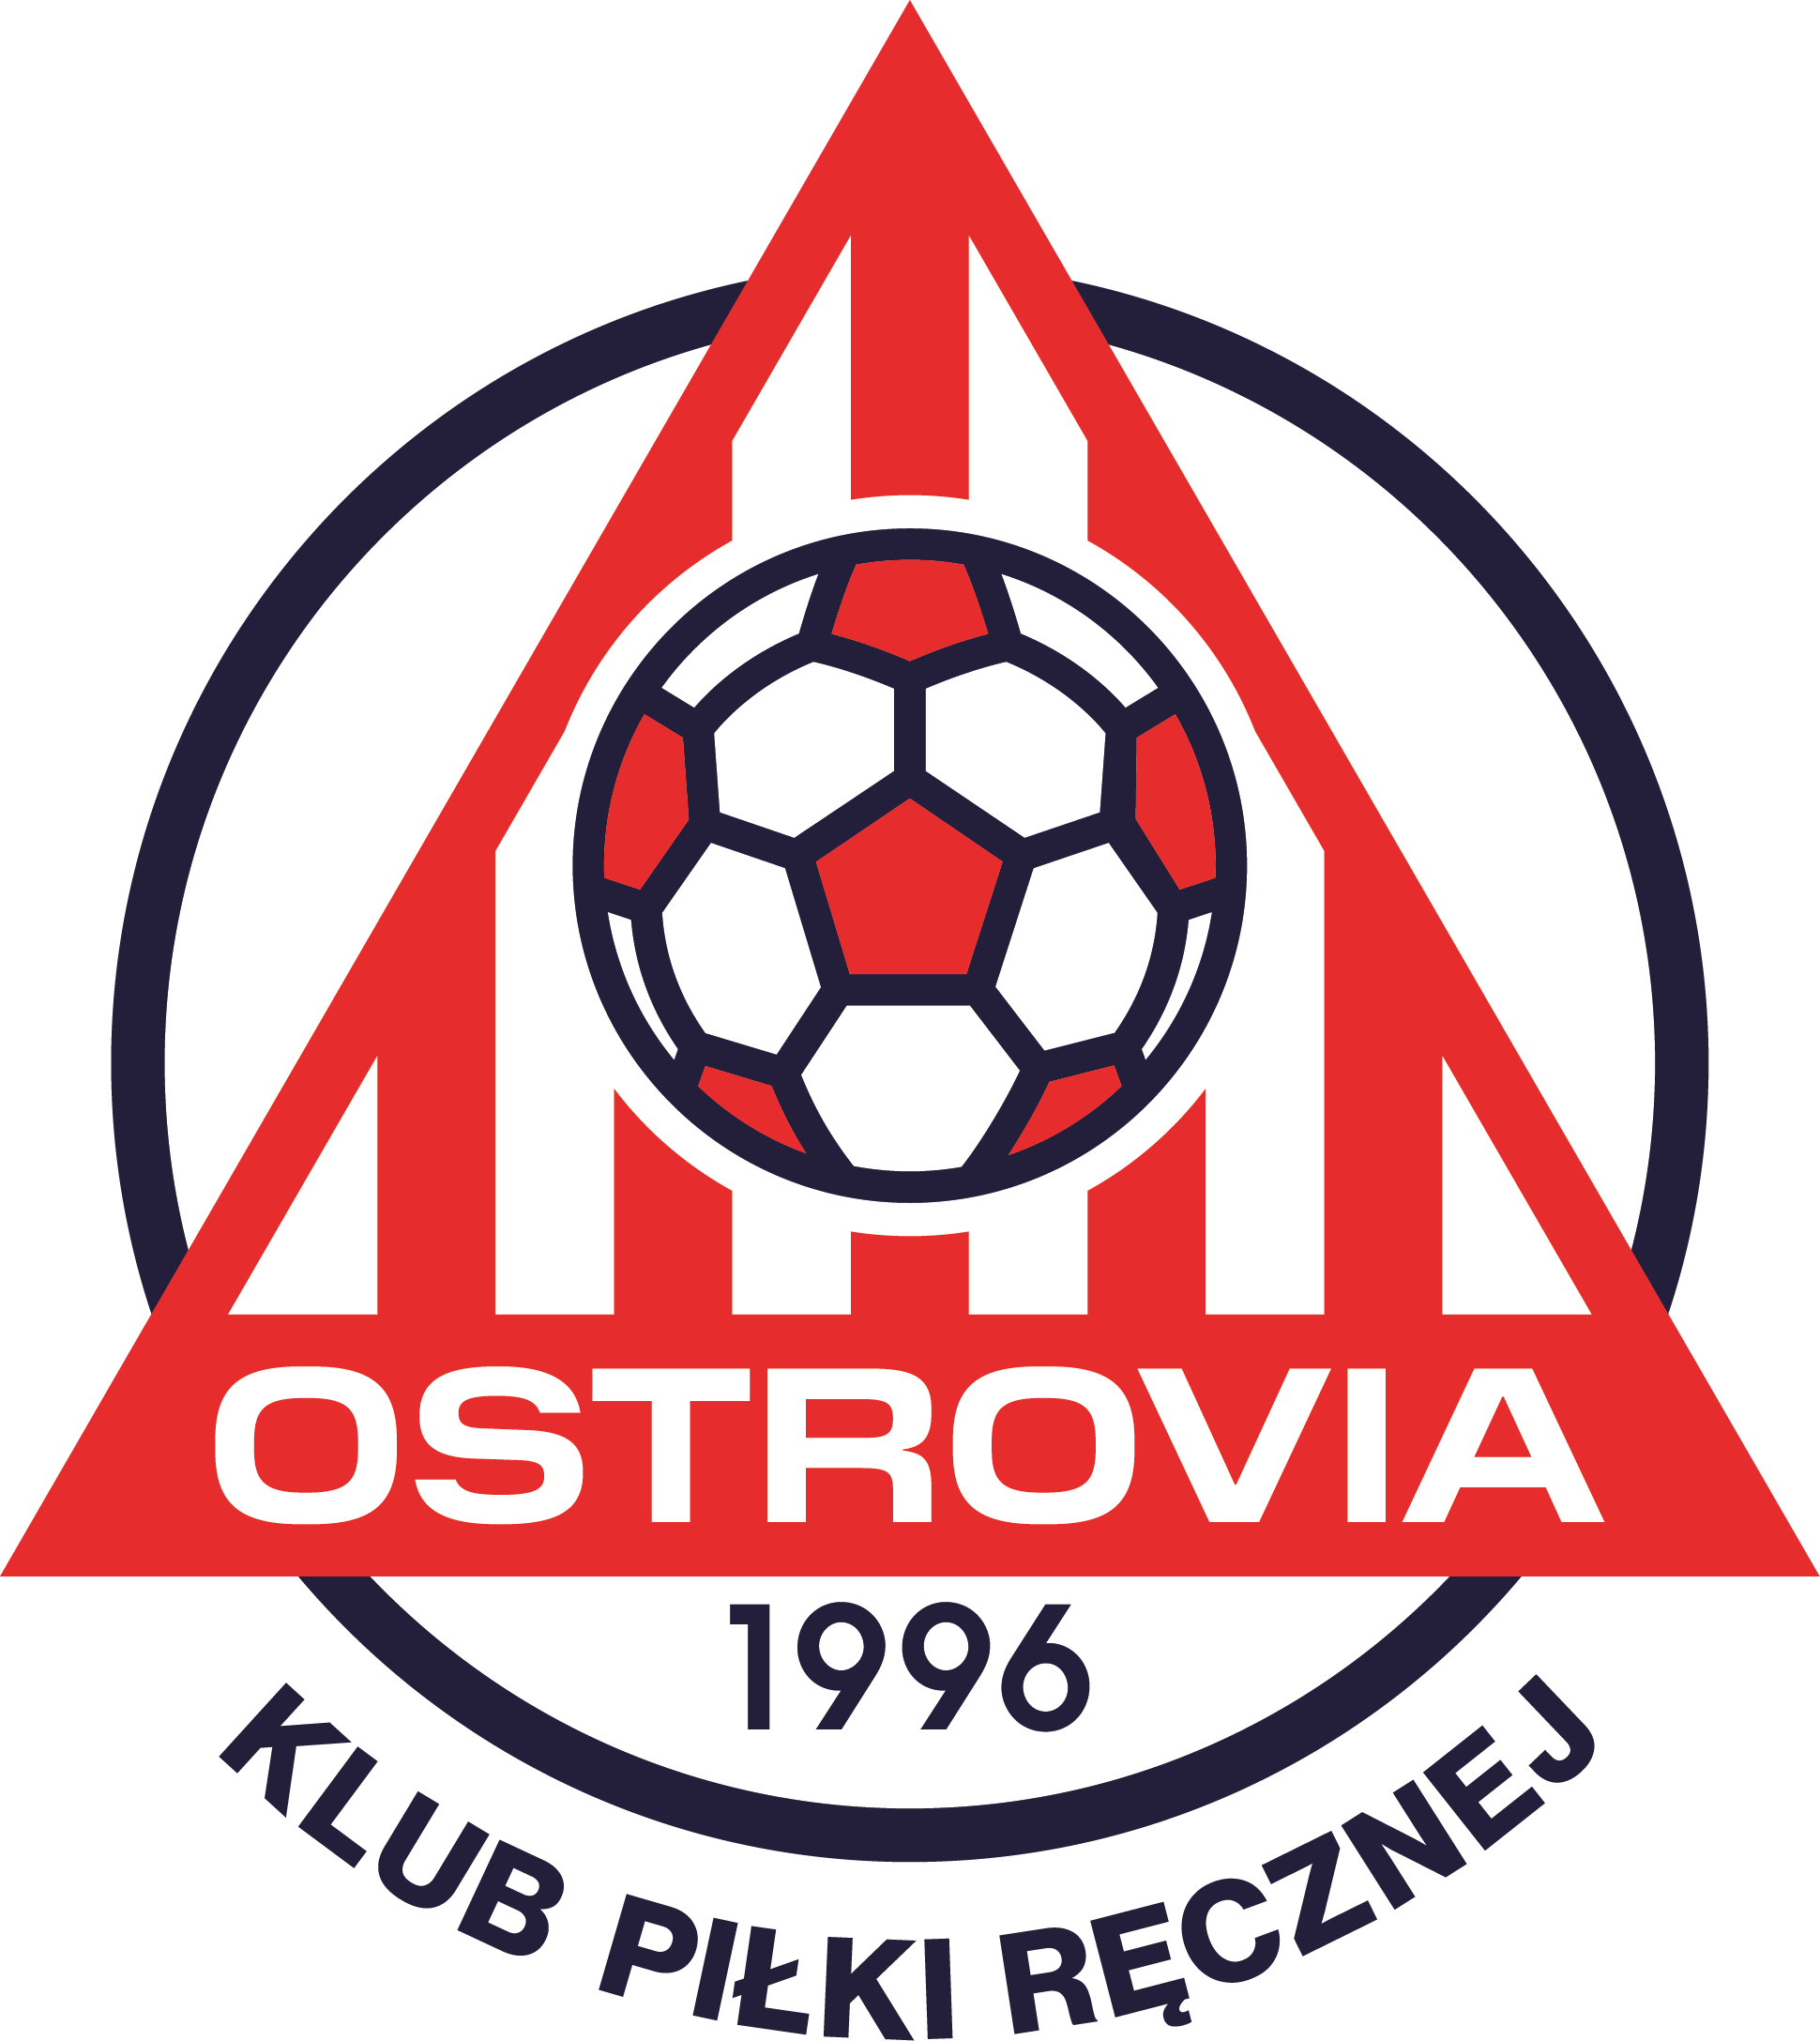 Arged Rebud KPR Ostrovia logo